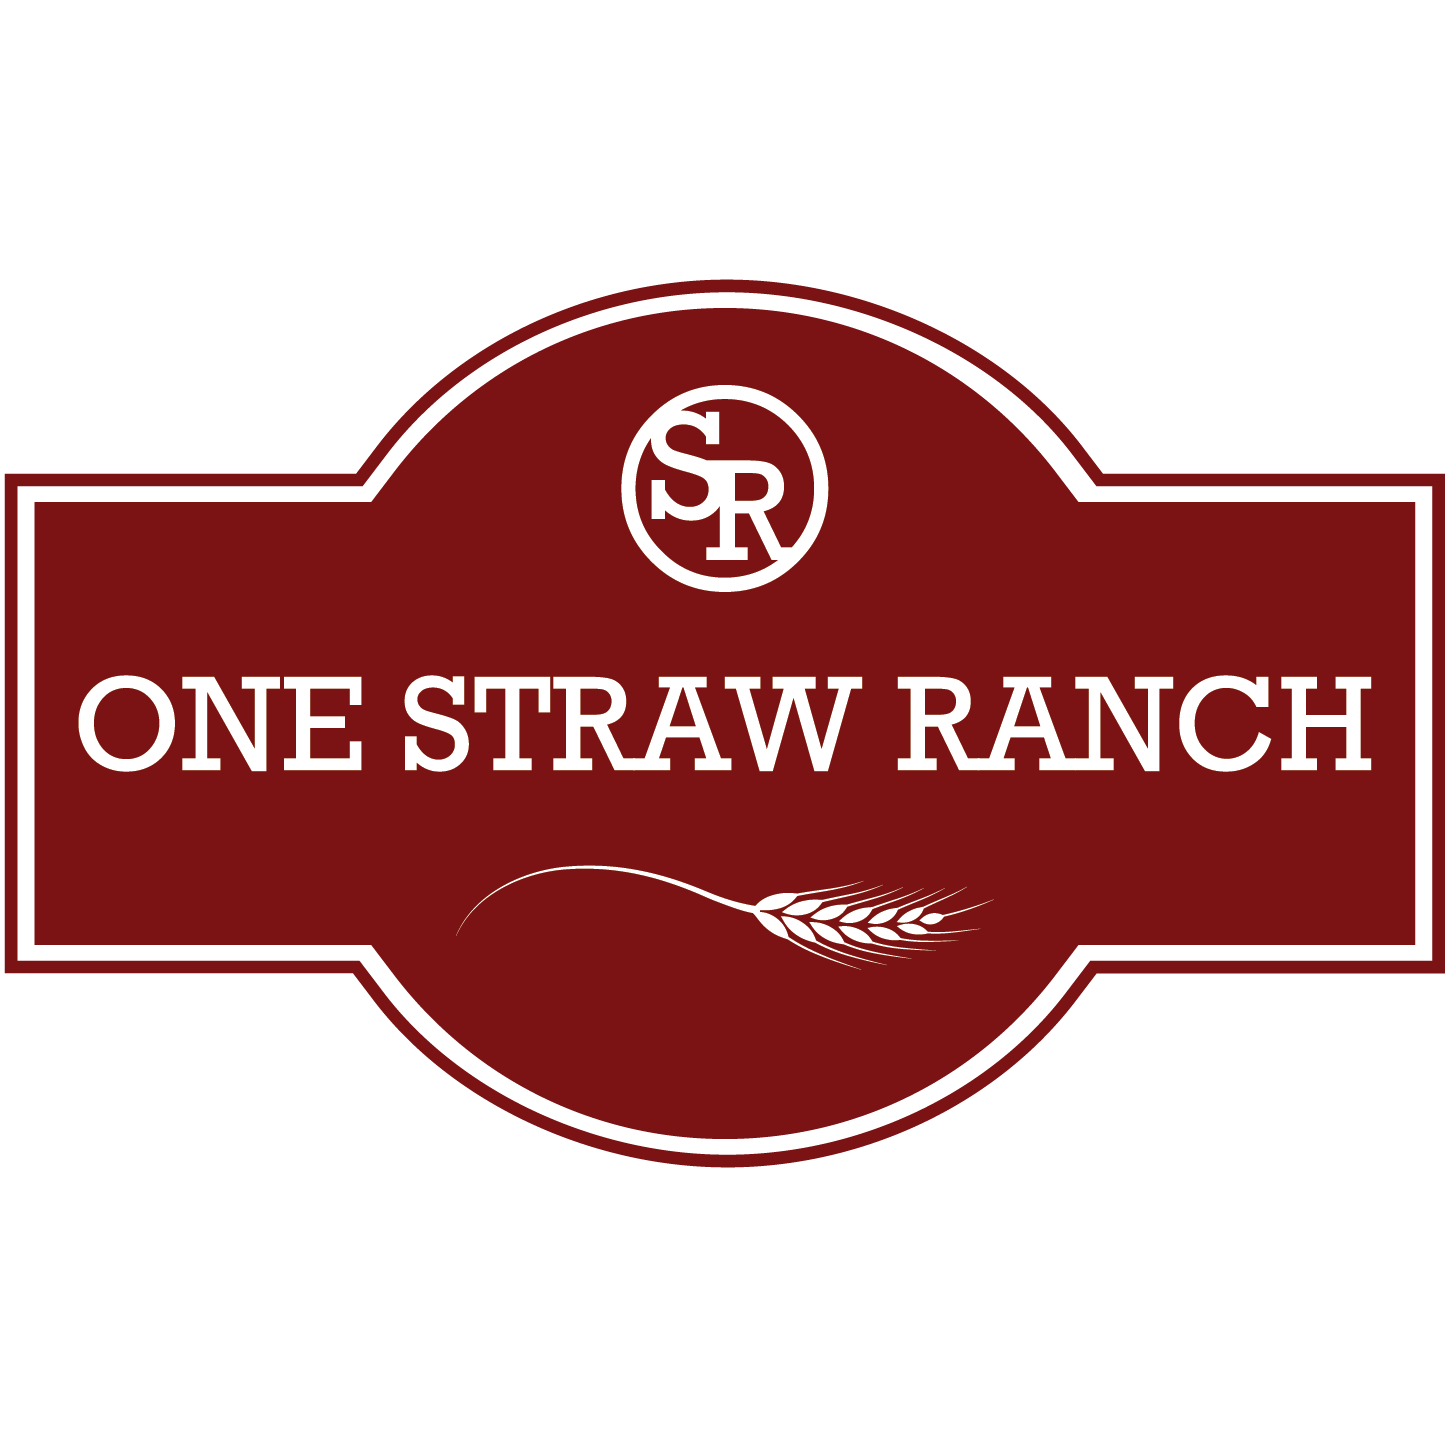 One Straw Ranch